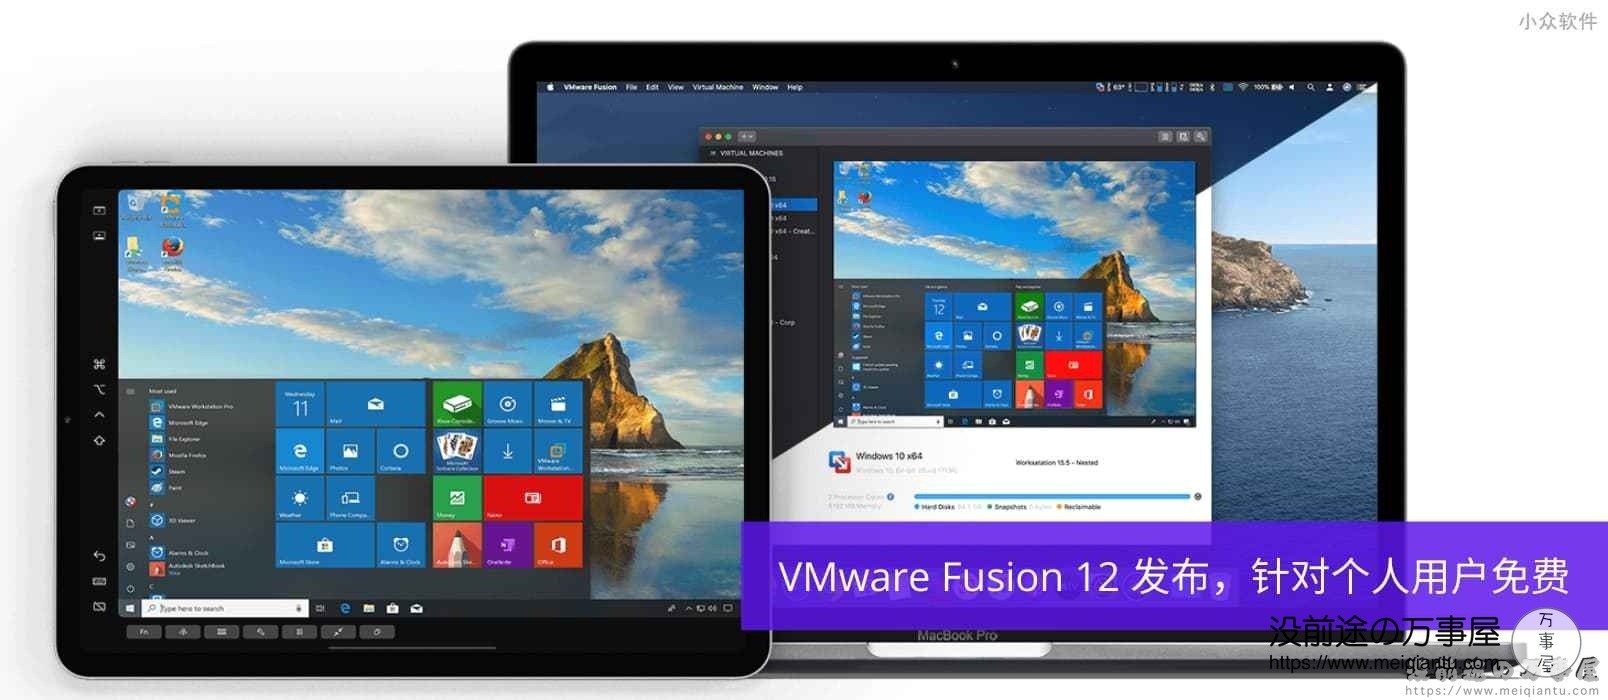 VMware Fusion 12 发布啦！这次个人版终于免费了！ - 没前途的万事屋